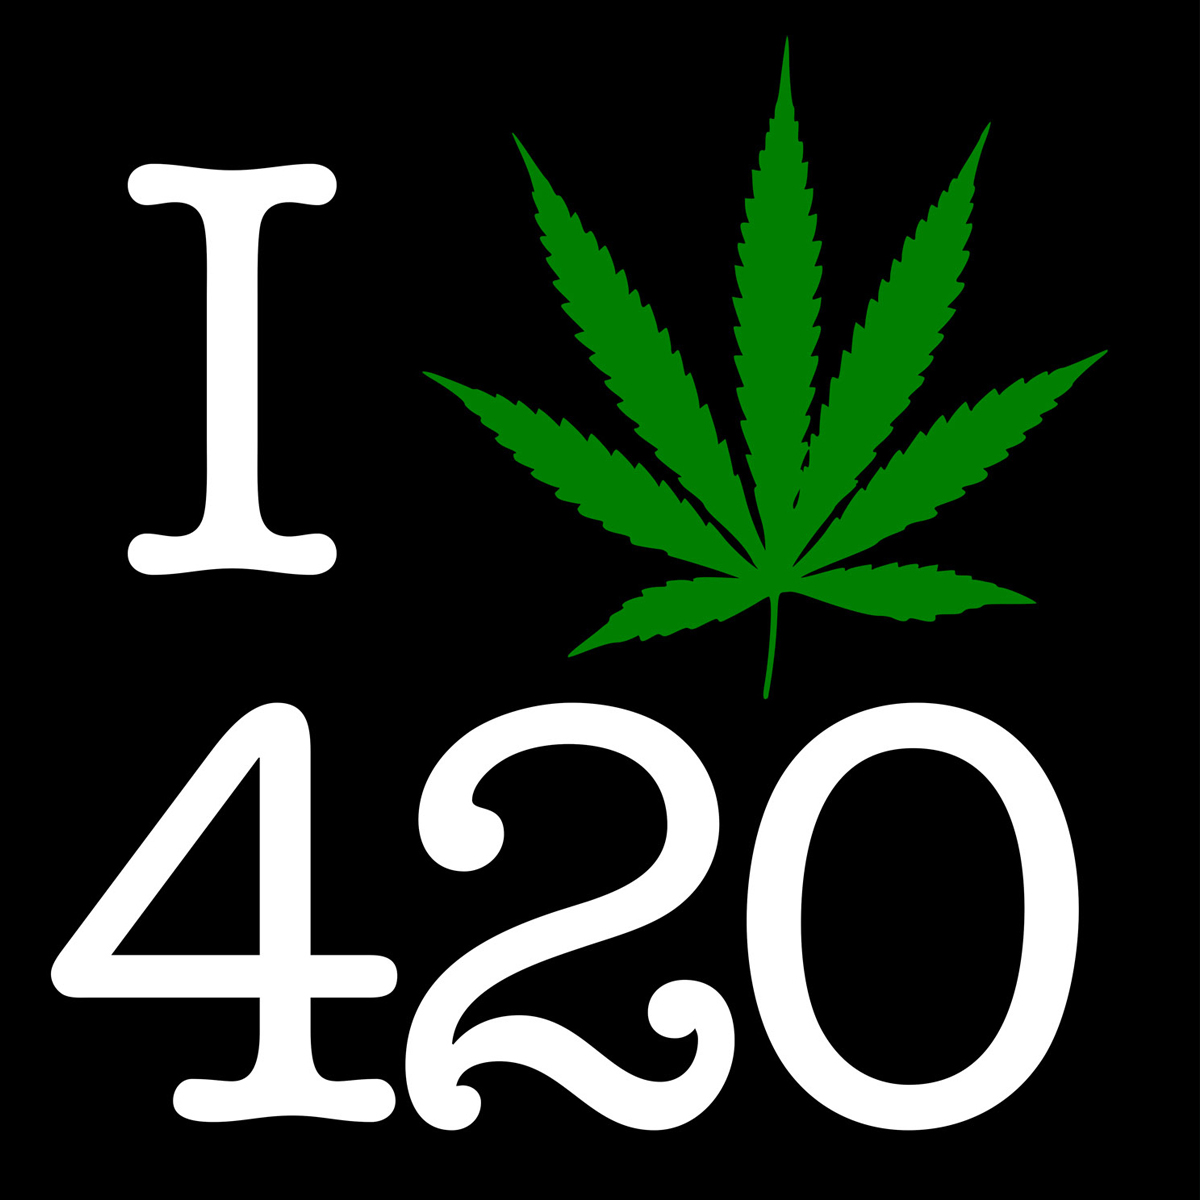 I Love 420 Pot Leaf Black TShirt Men’s